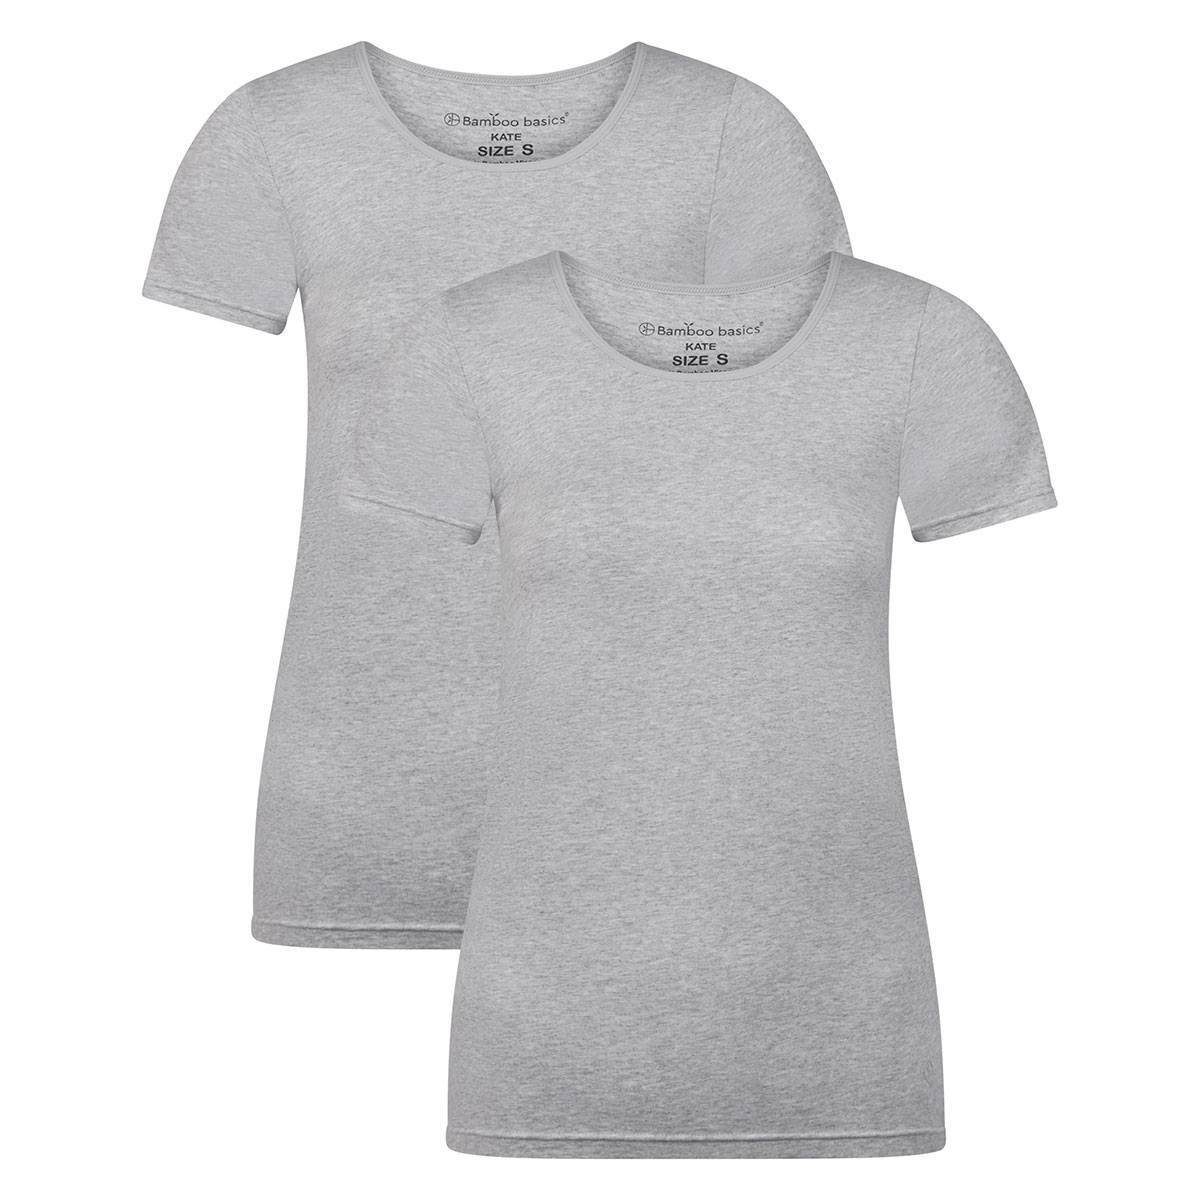 Bamboo basics Unterhemd Damen T-Shirt KATE, 2er Pack - Unterhemd Grau